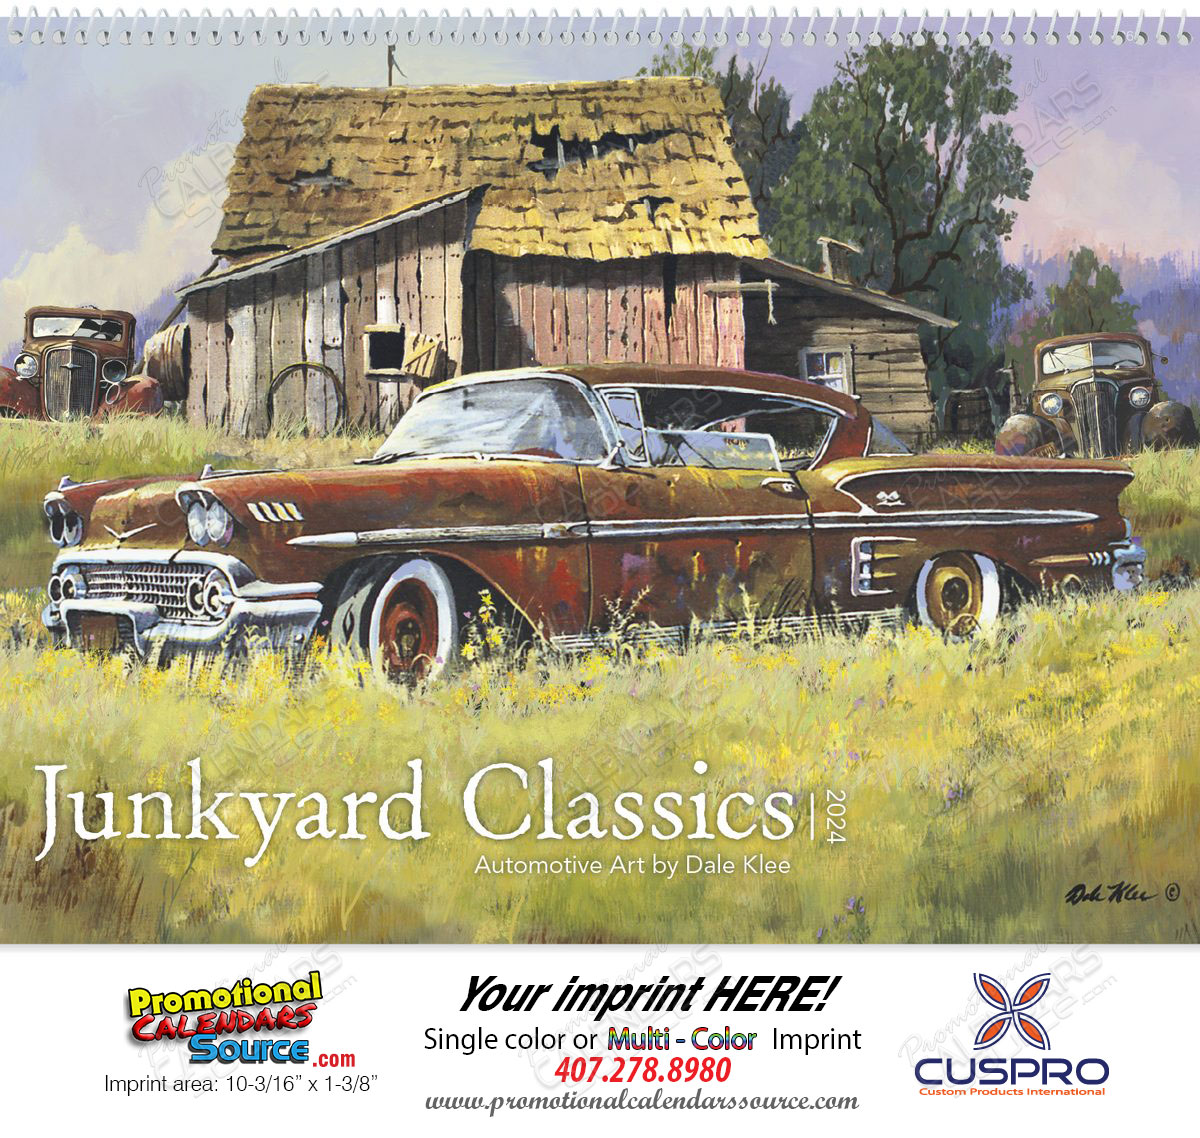 Junkyard Classics by Dale Klee Promotional Calendar 